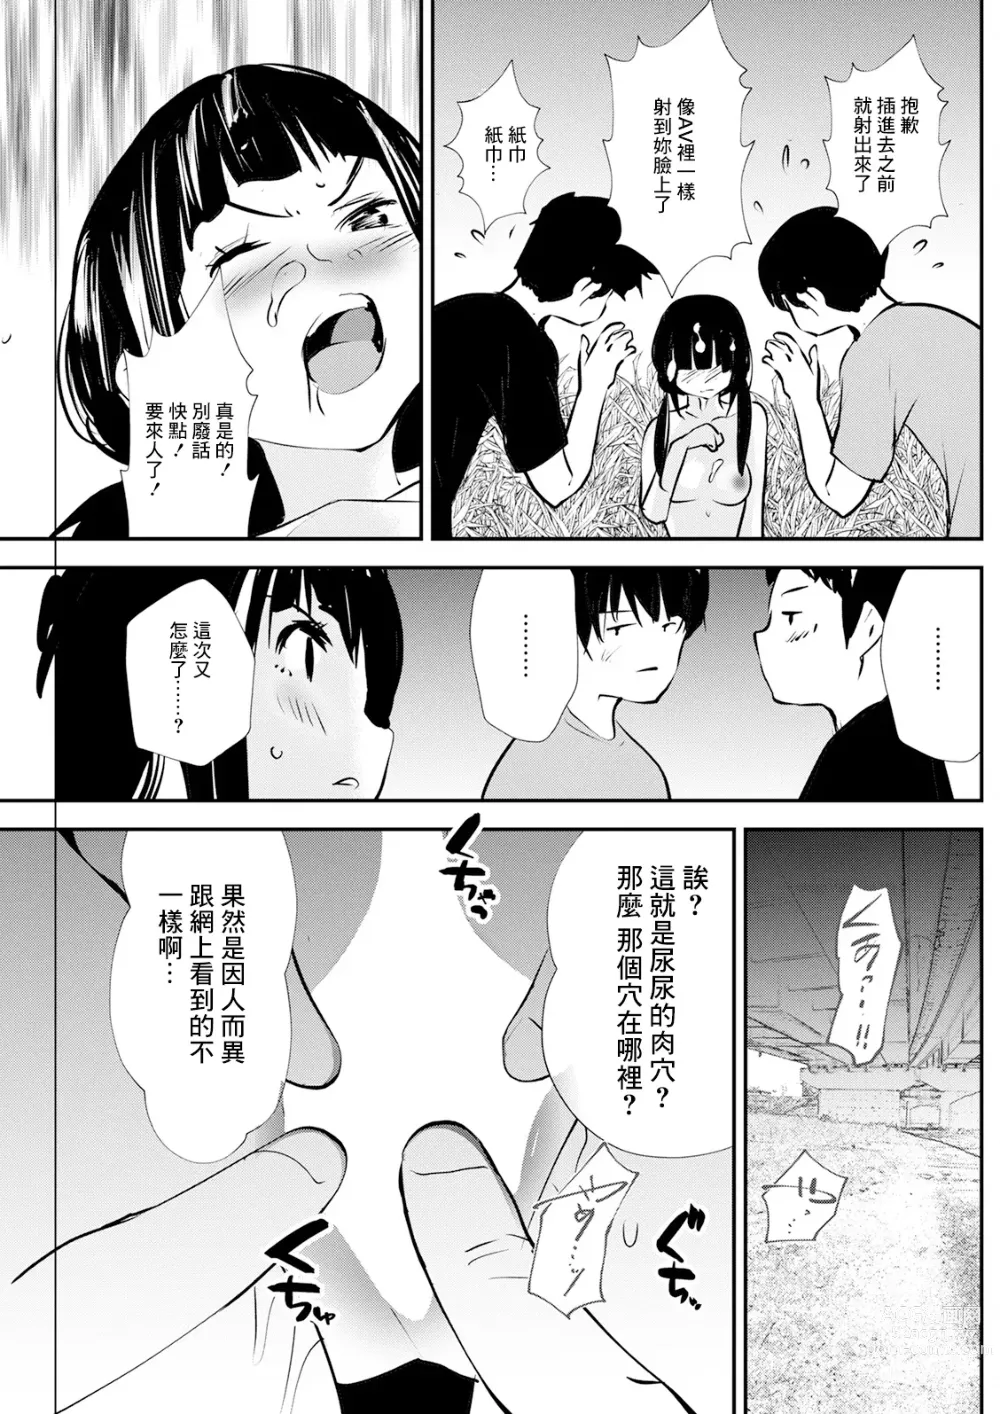 Page 9 of manga 3-nin no Yakusoku - Promise of three